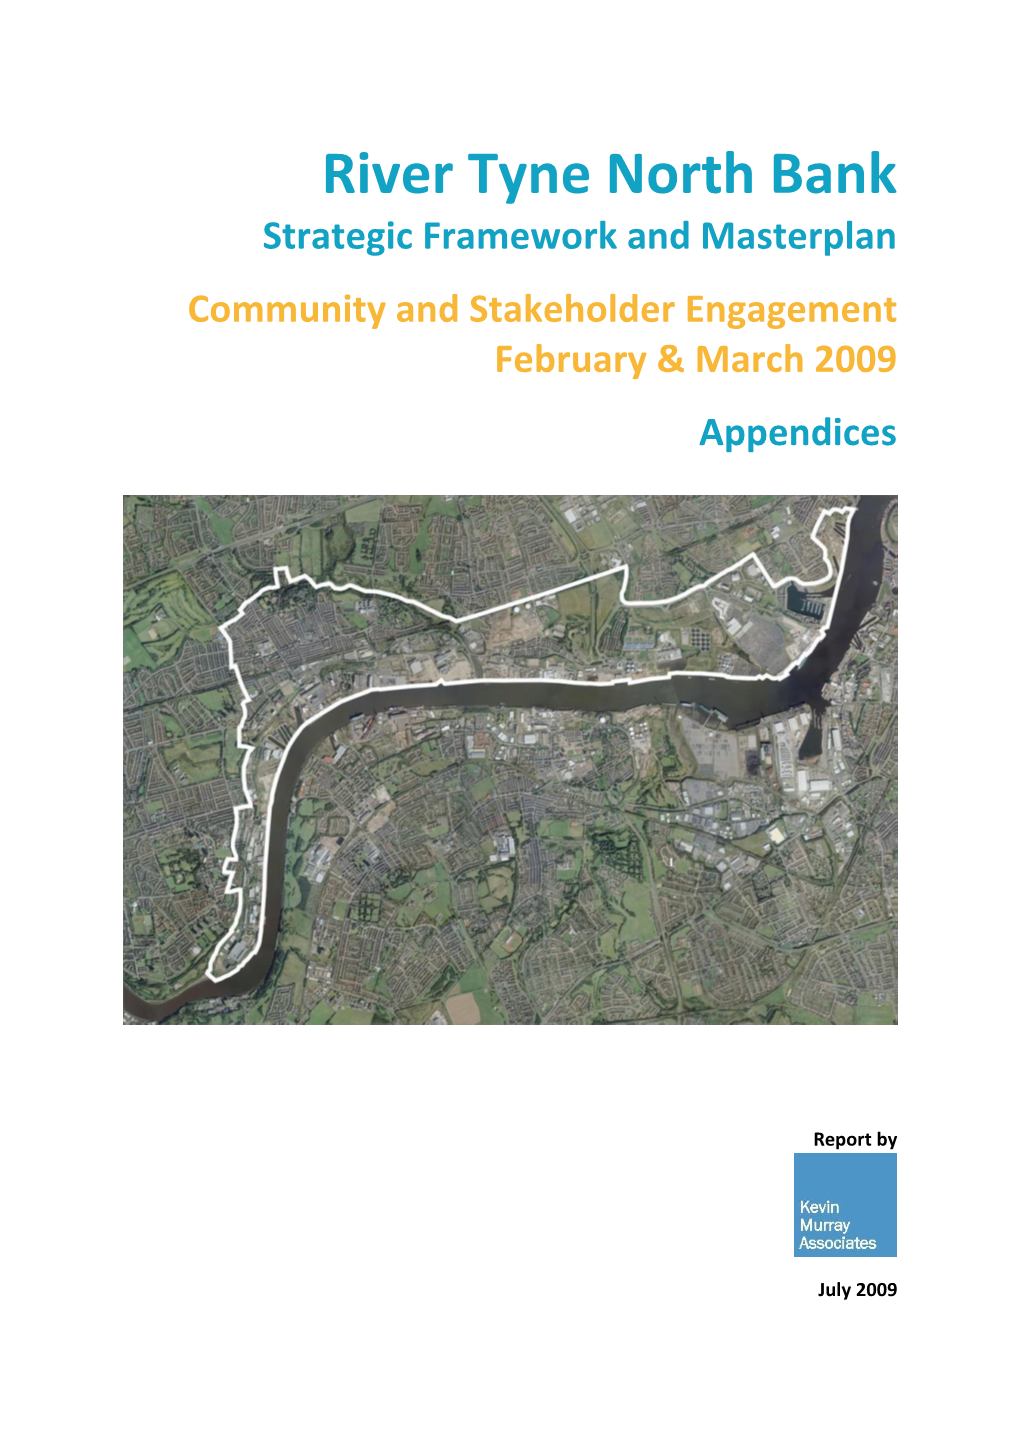 River Tyne North Bank Strategic Framework and Masterplan